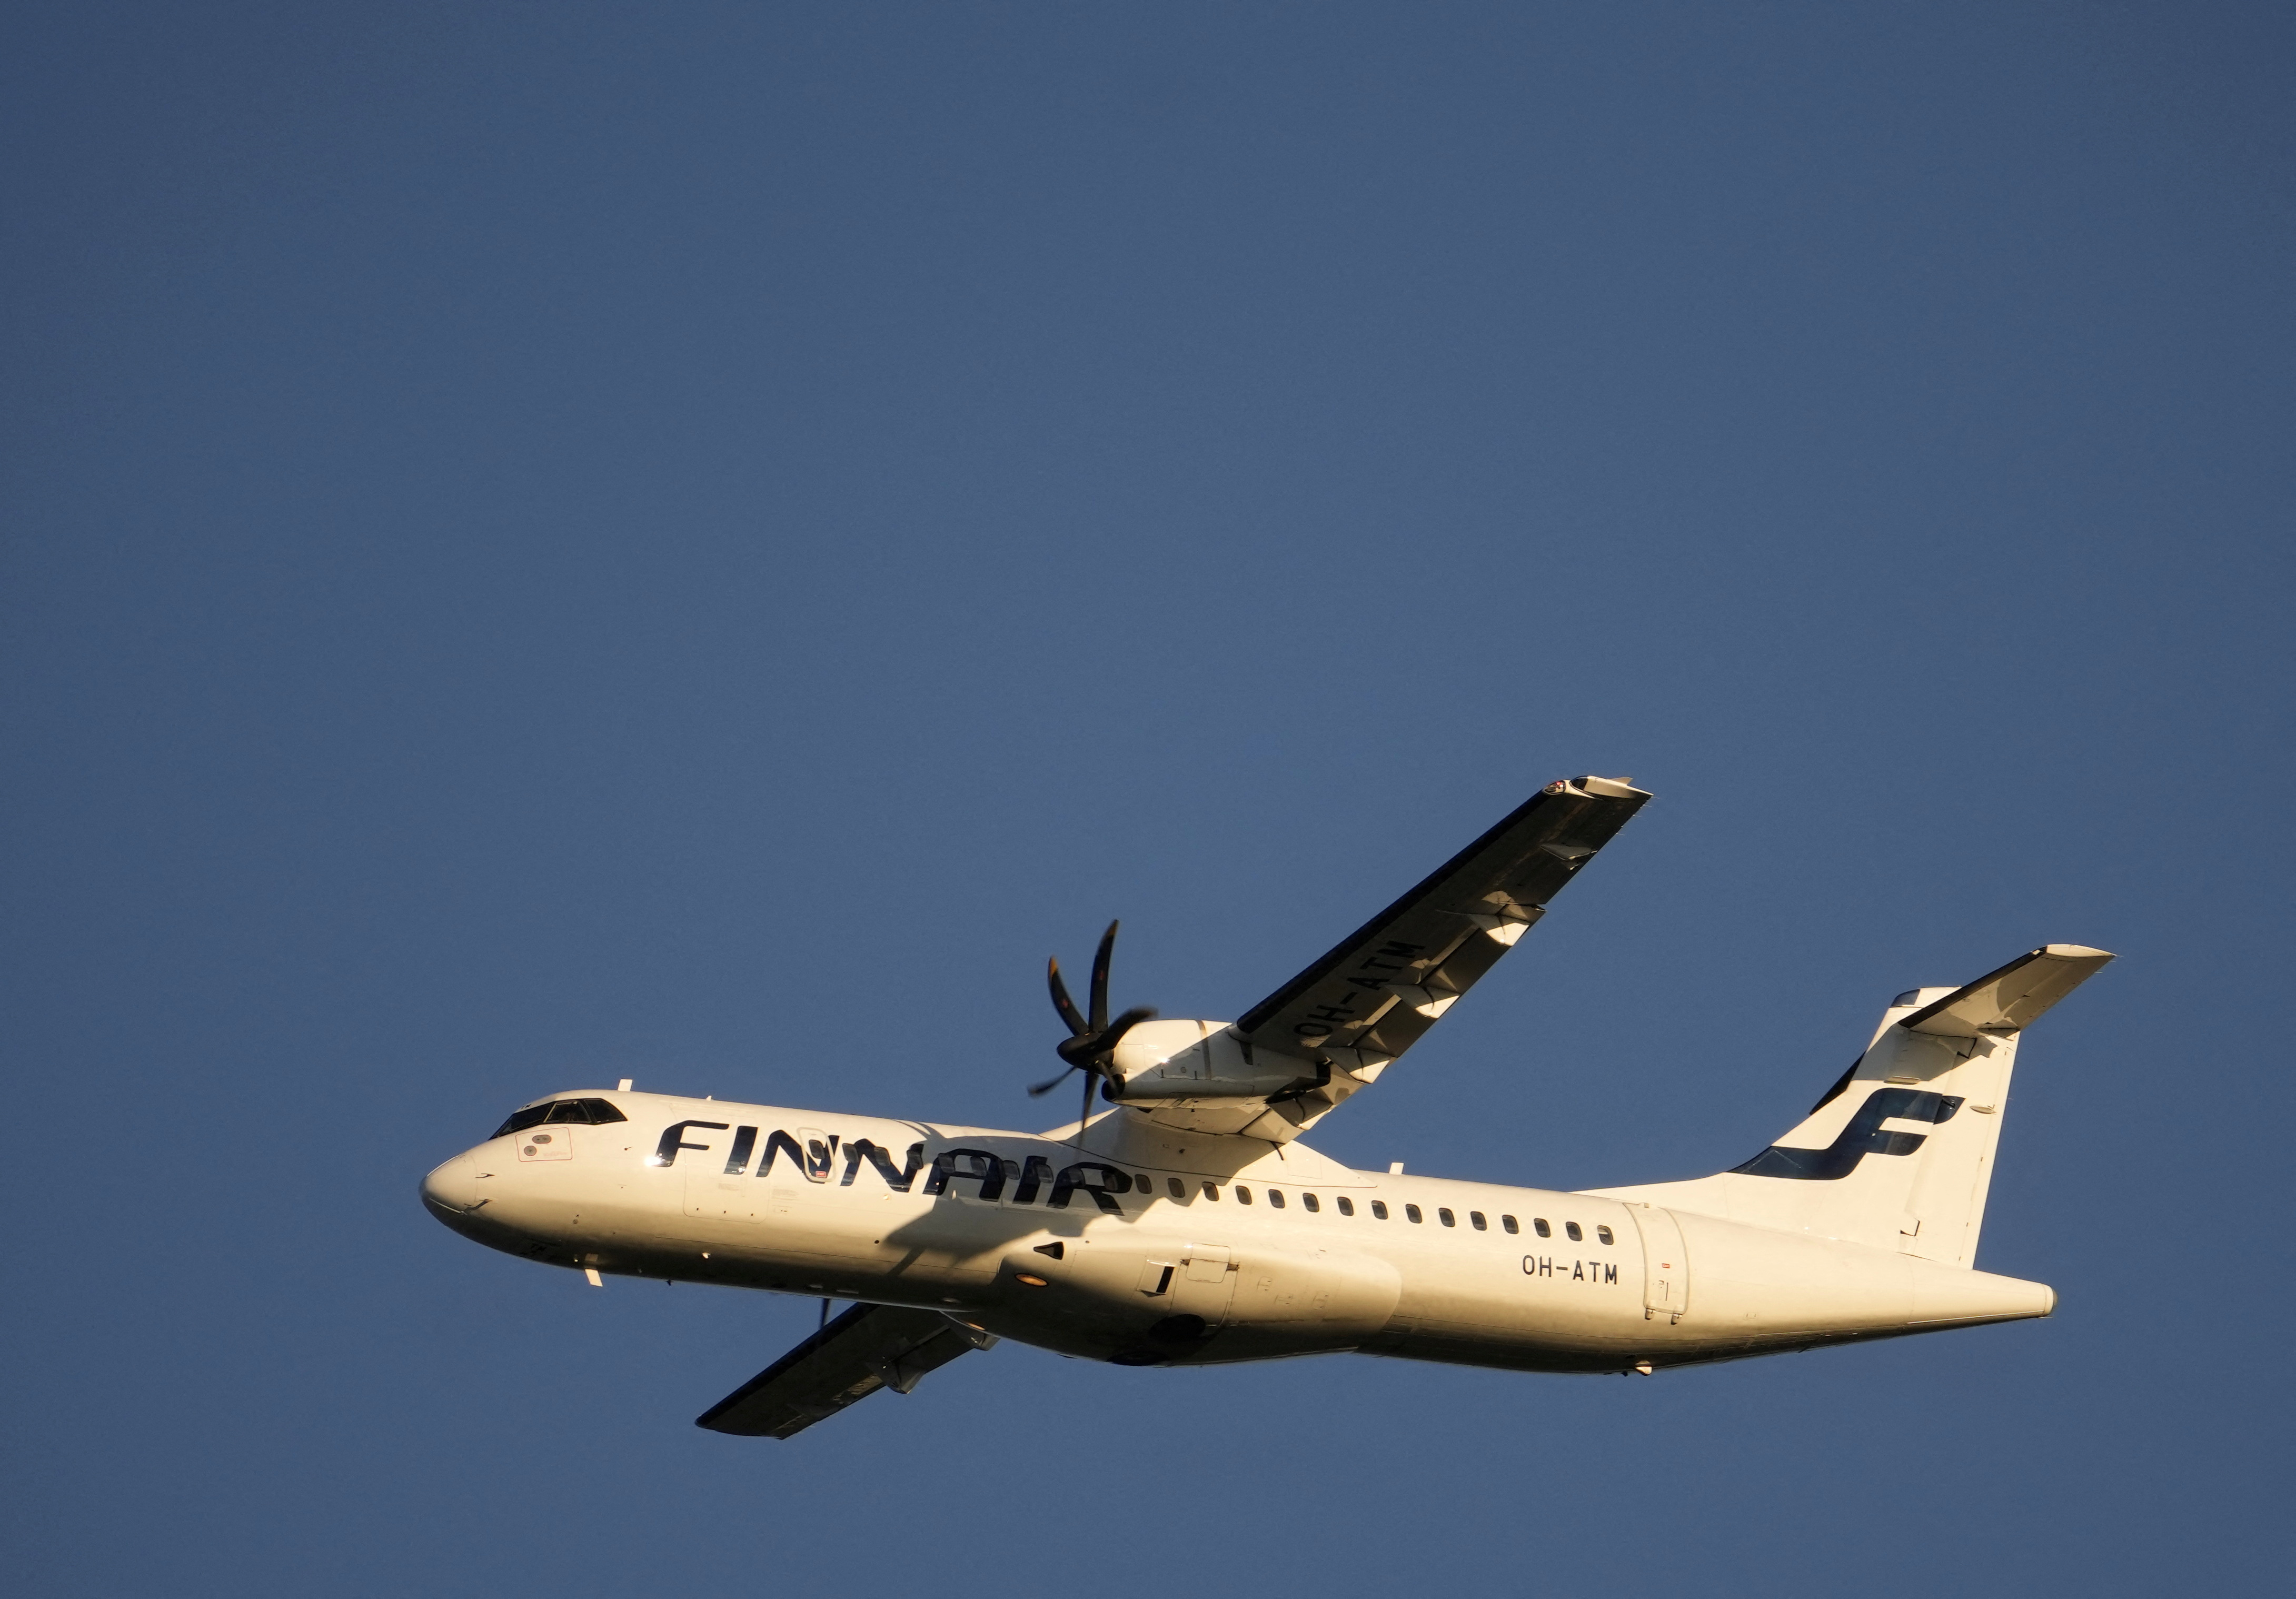 Finnair ATR 72-500 plane takes off from Vilnius international airport